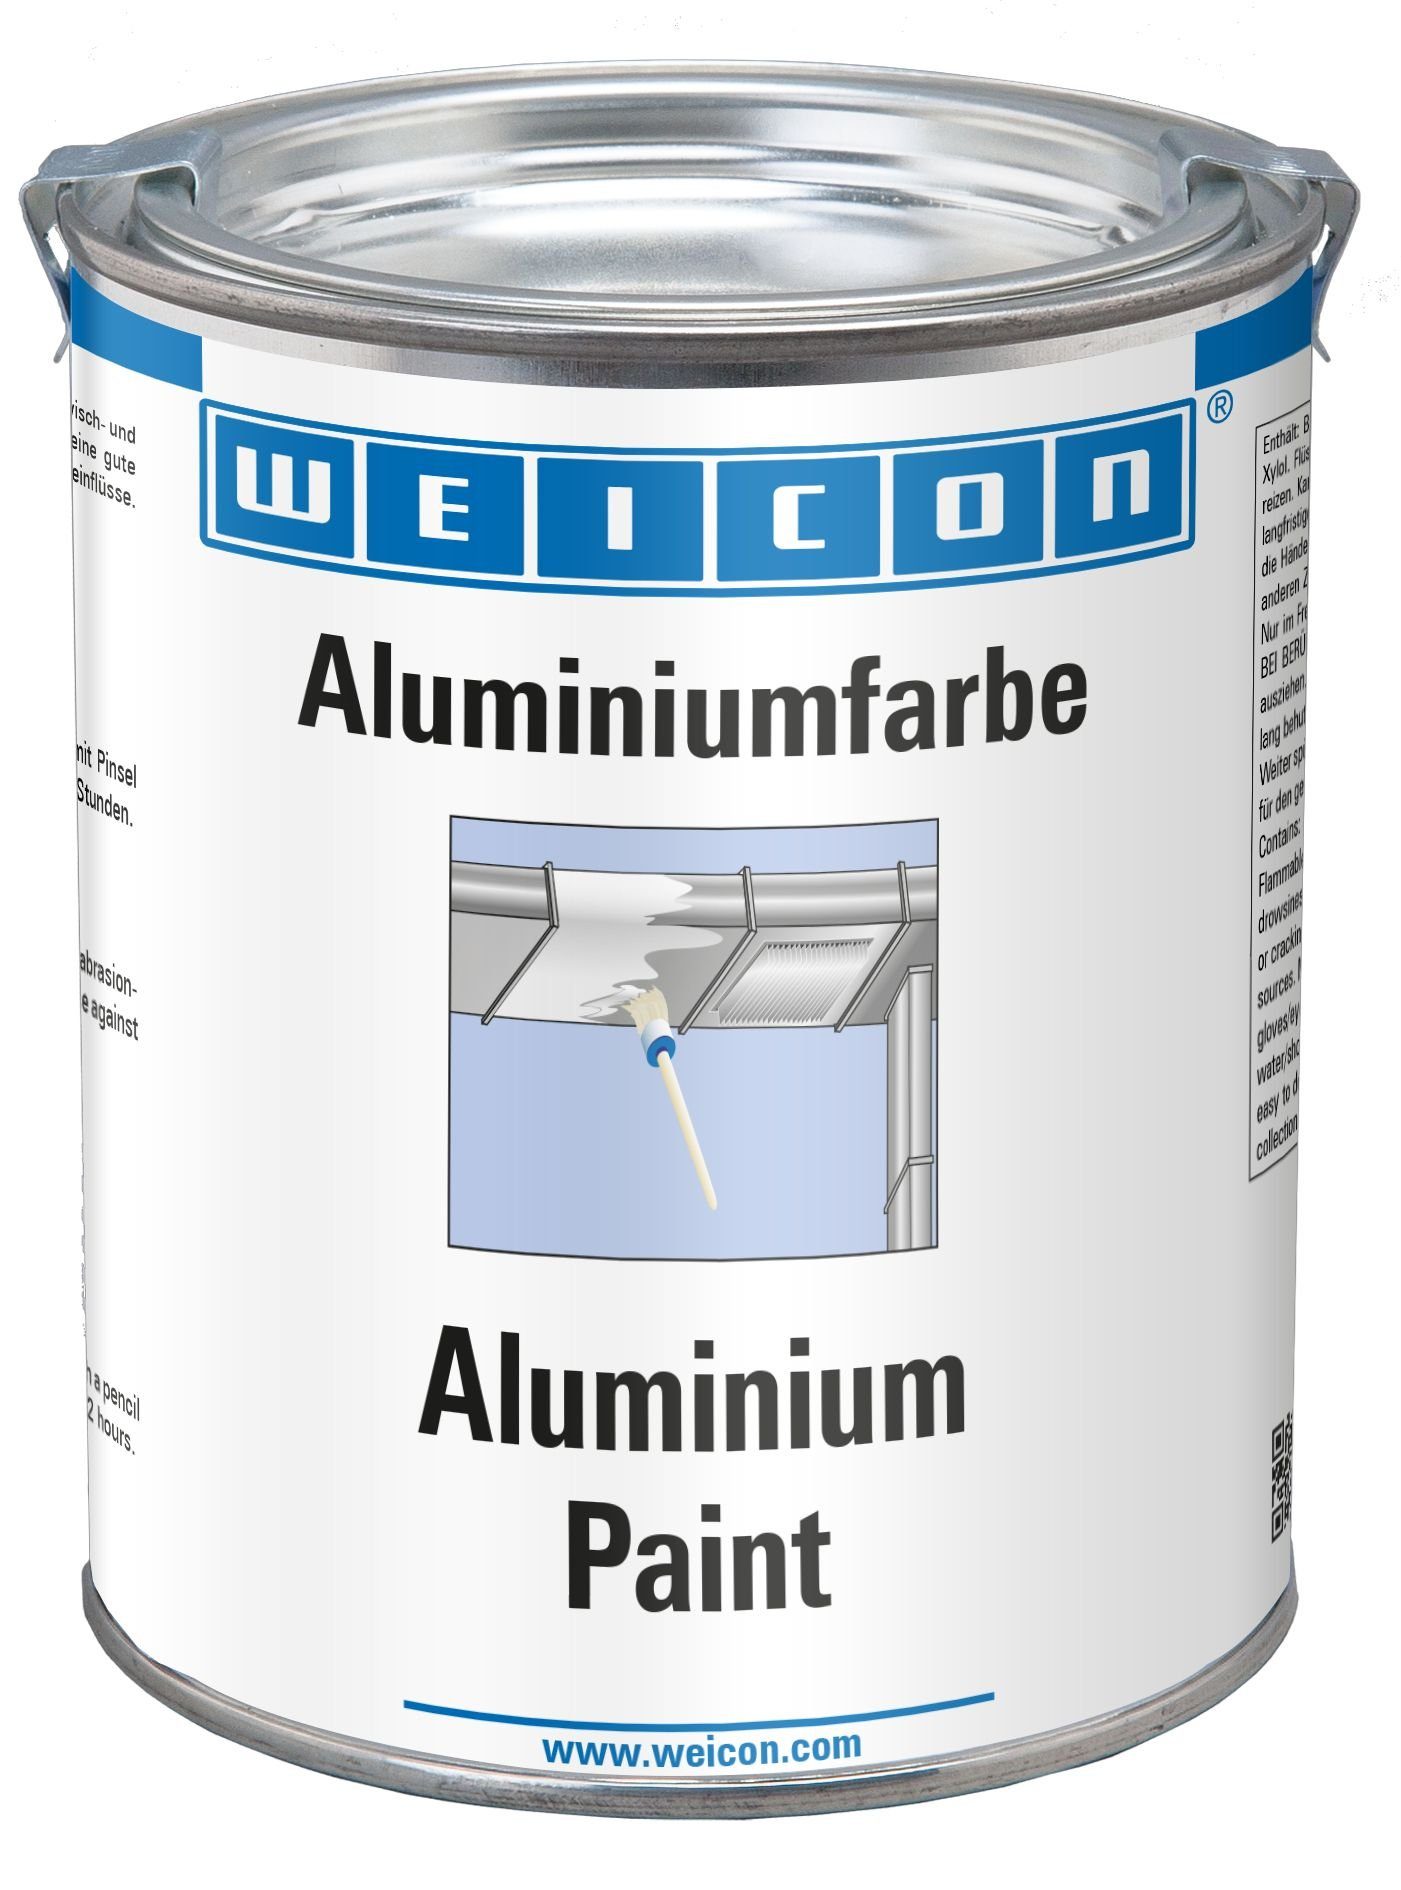 WEICON Metallglanzfarbe Aluminiumfarbe, Korrosionsschutz aus Aluminiumpigmentbeschichtung